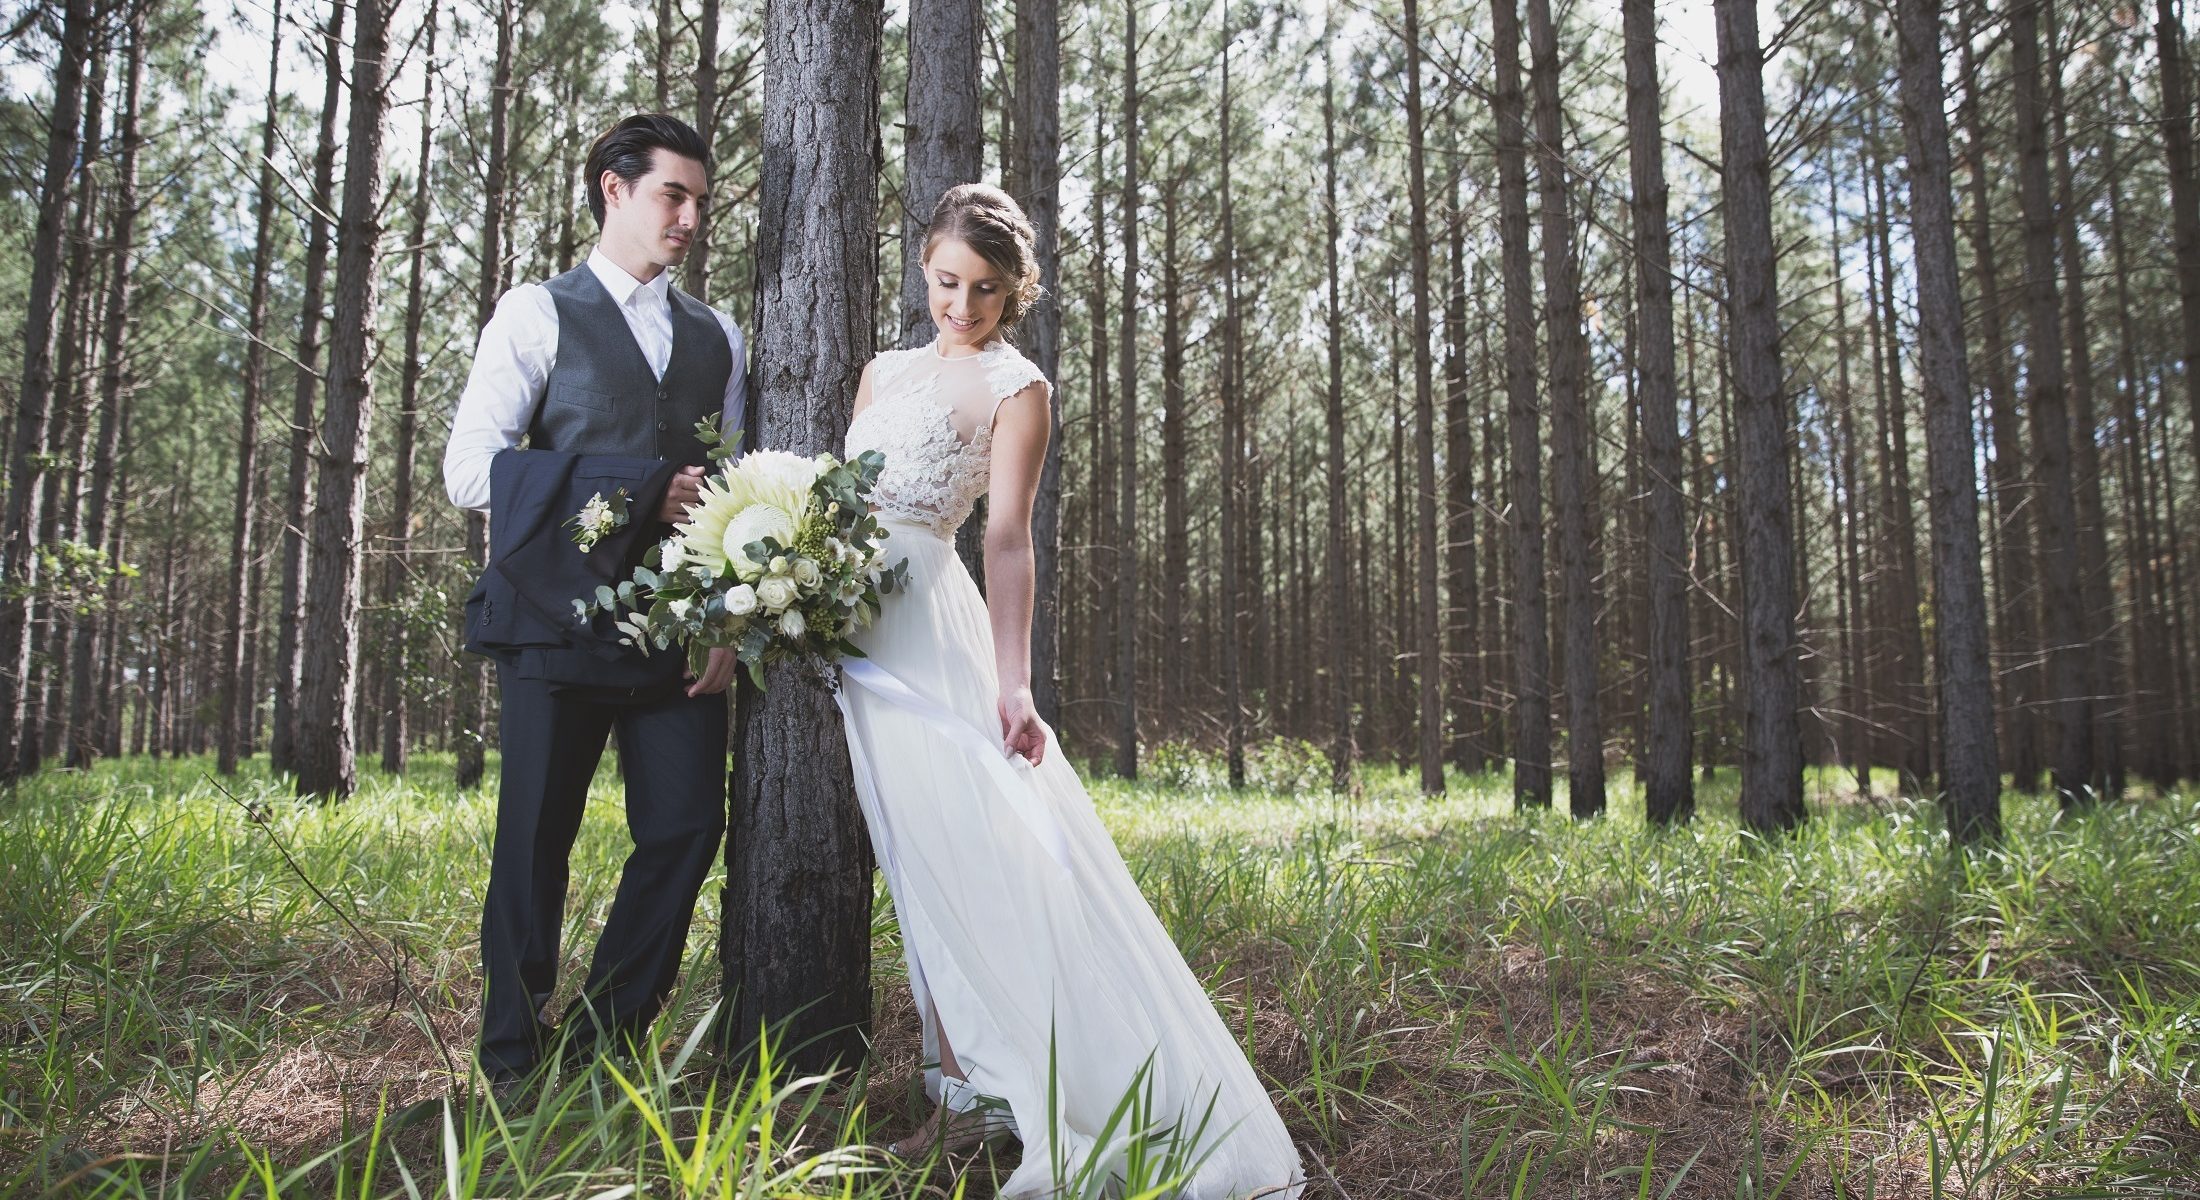 Moreton Bay Region Hinterland Weddings Couple In Woods